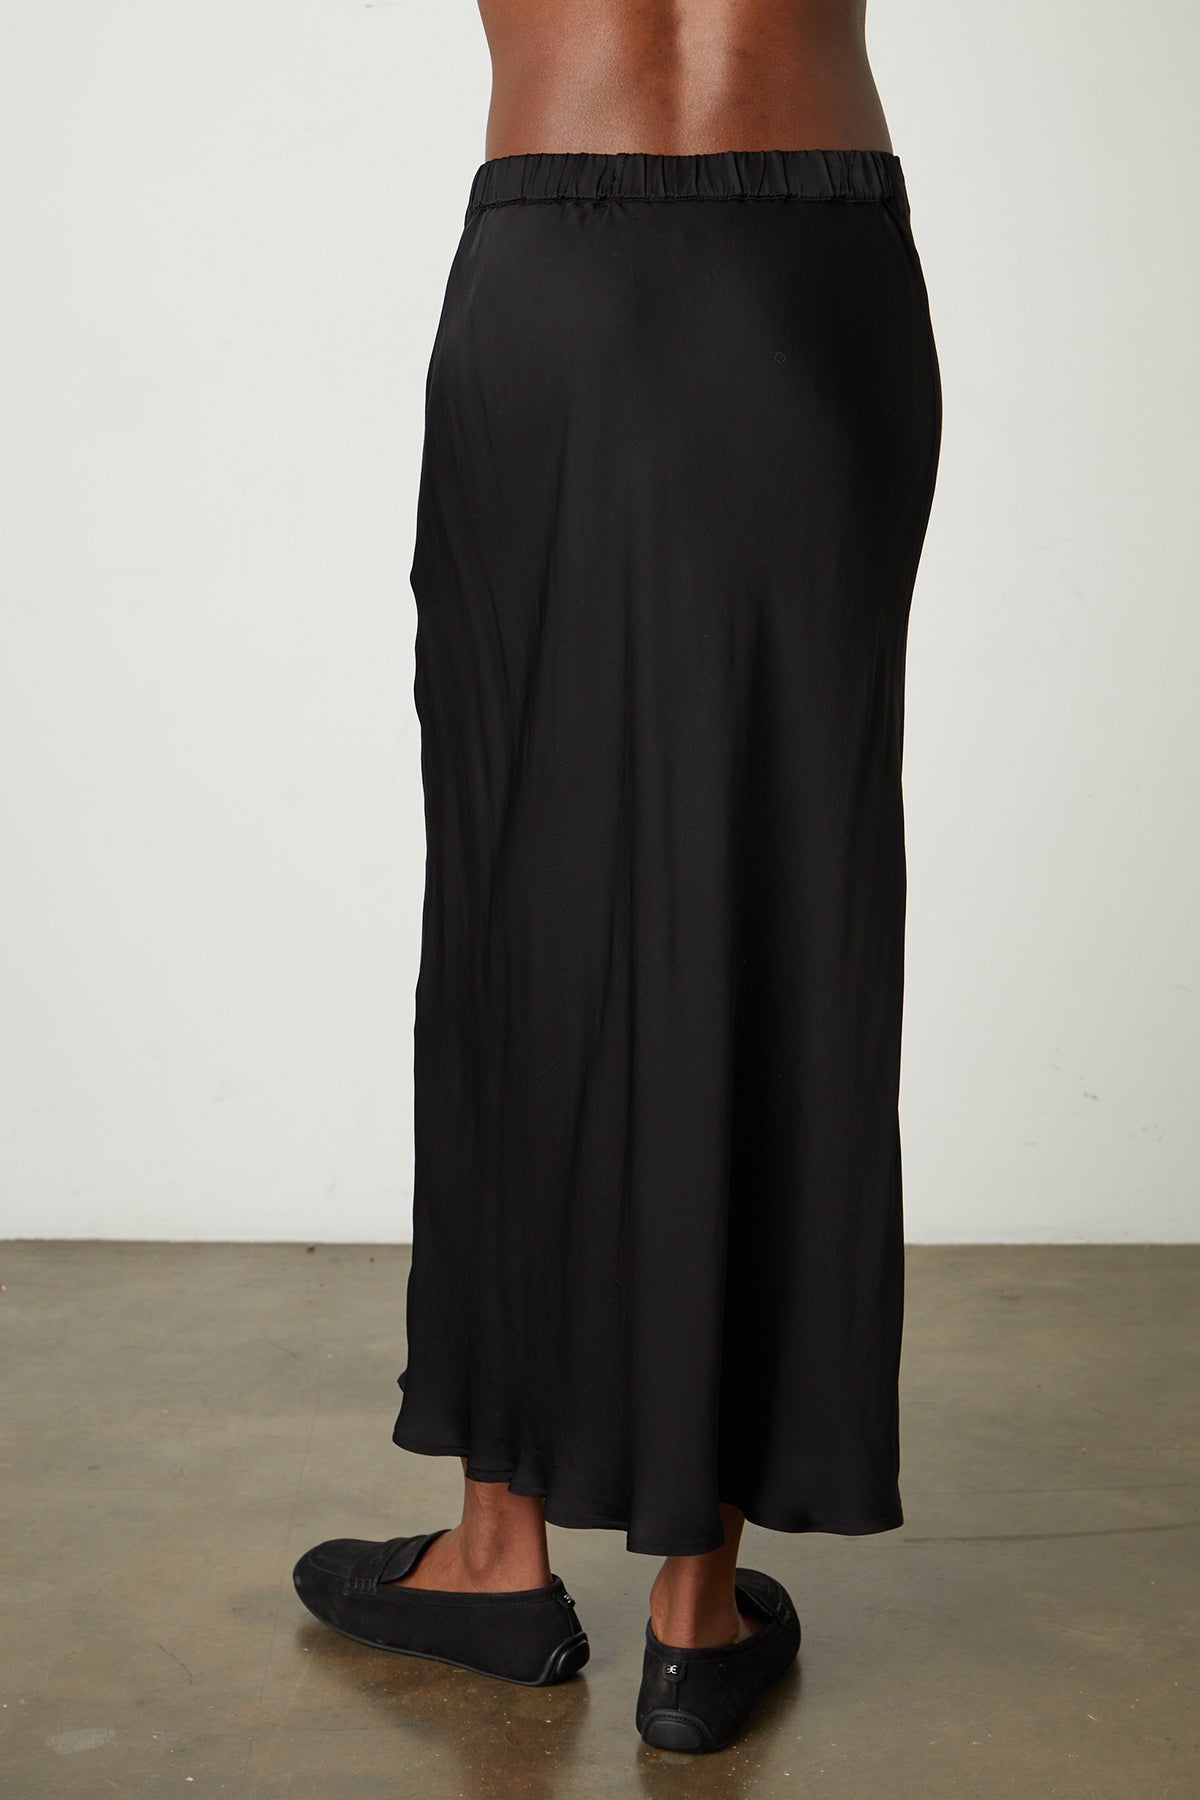 The back of a woman wearing the Velvet by Graham & Spencer AUBREE SATIN MIDI SKIRT.-25870893416641